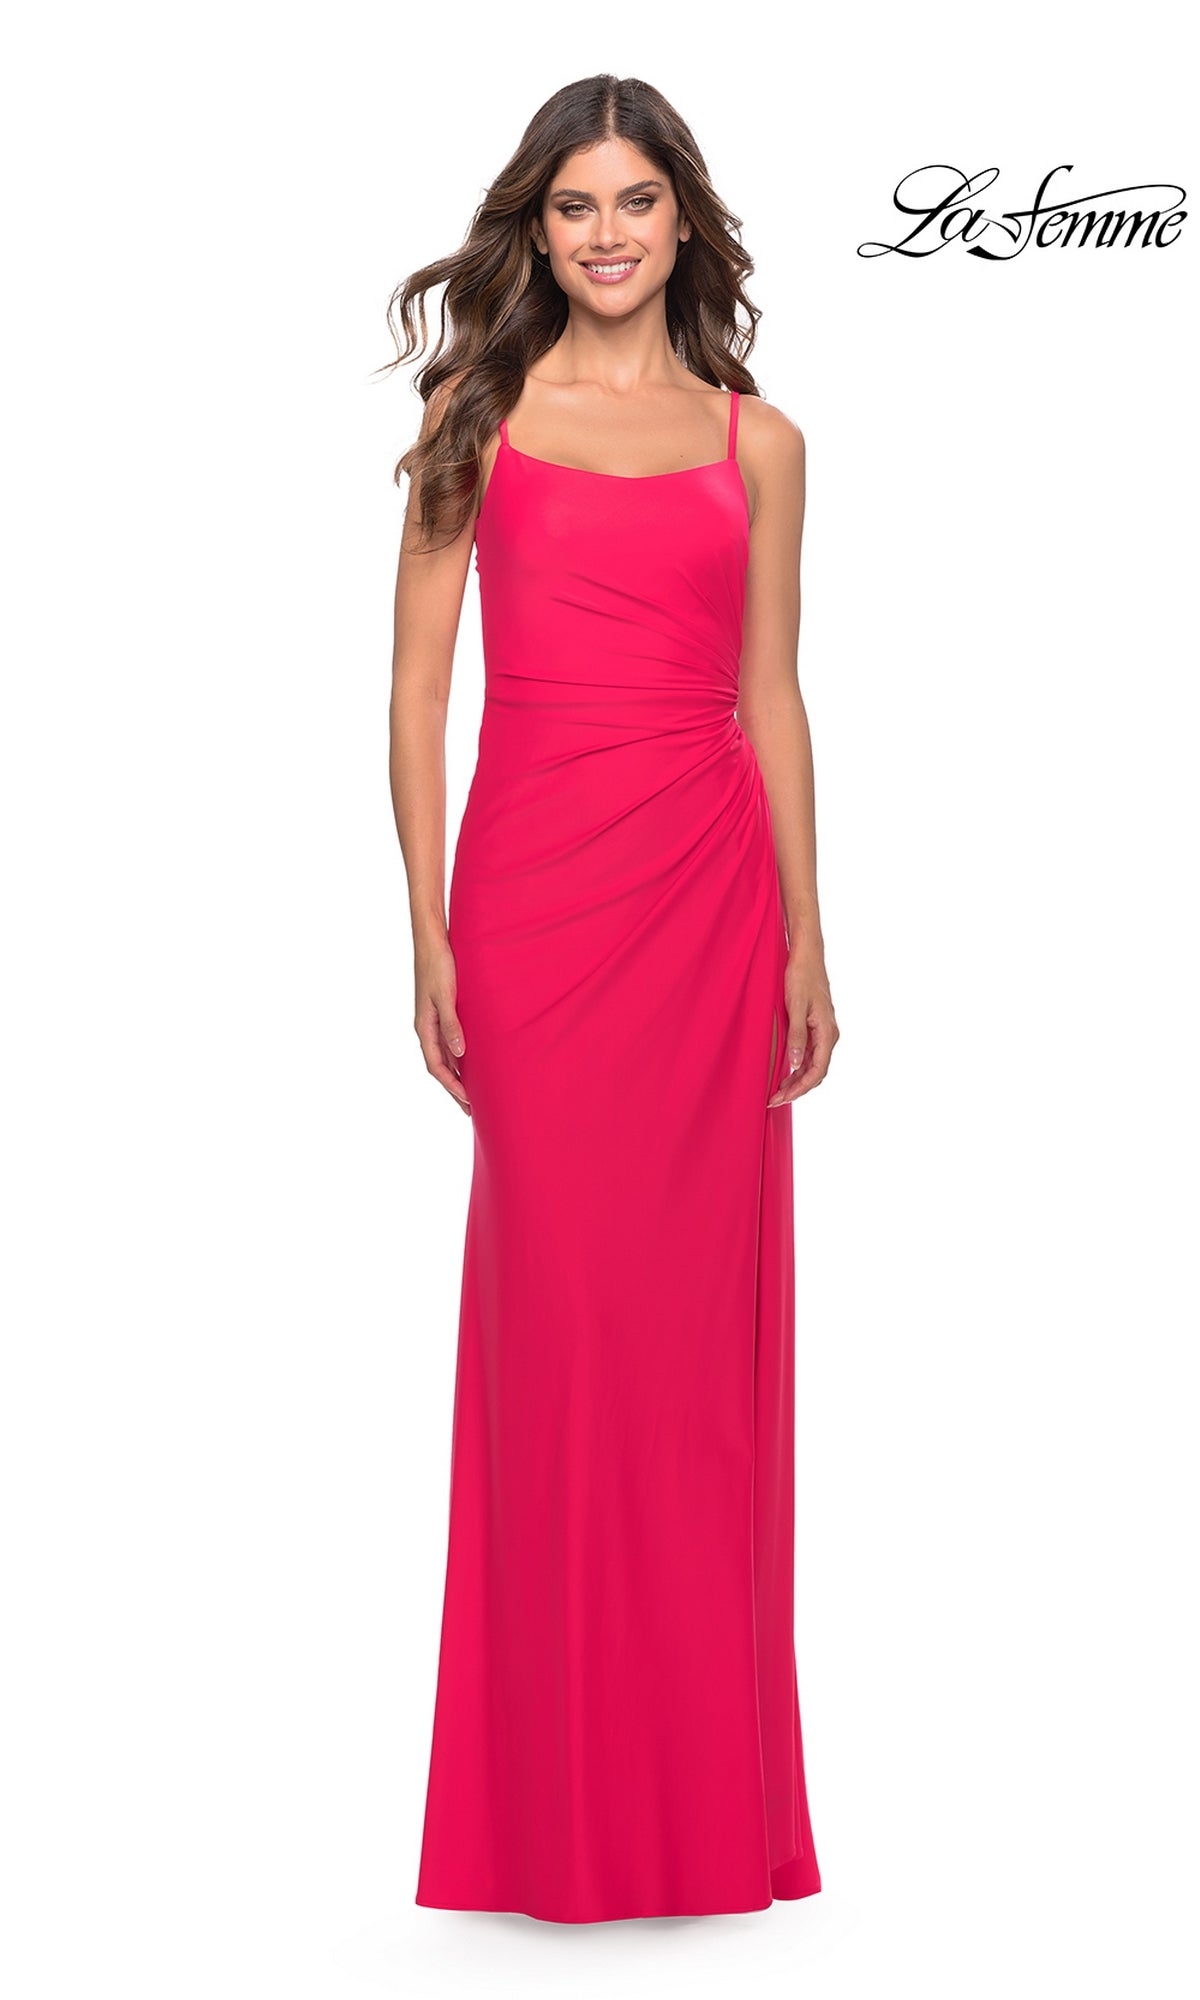  La Femme 31329 Formal Prom Dress